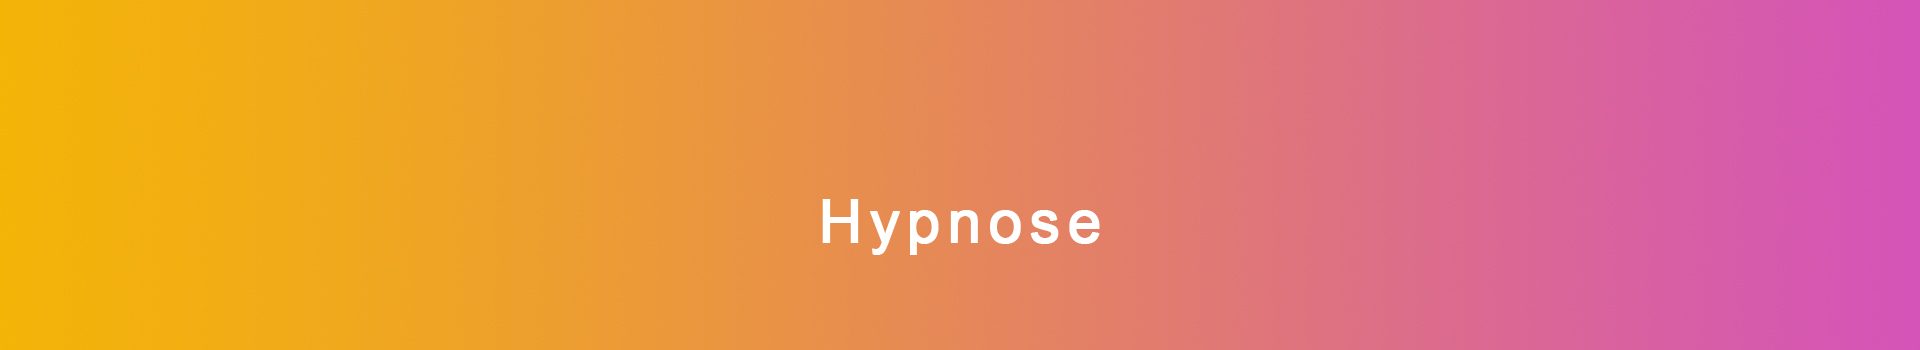 Hypnose-Headerbild-neu